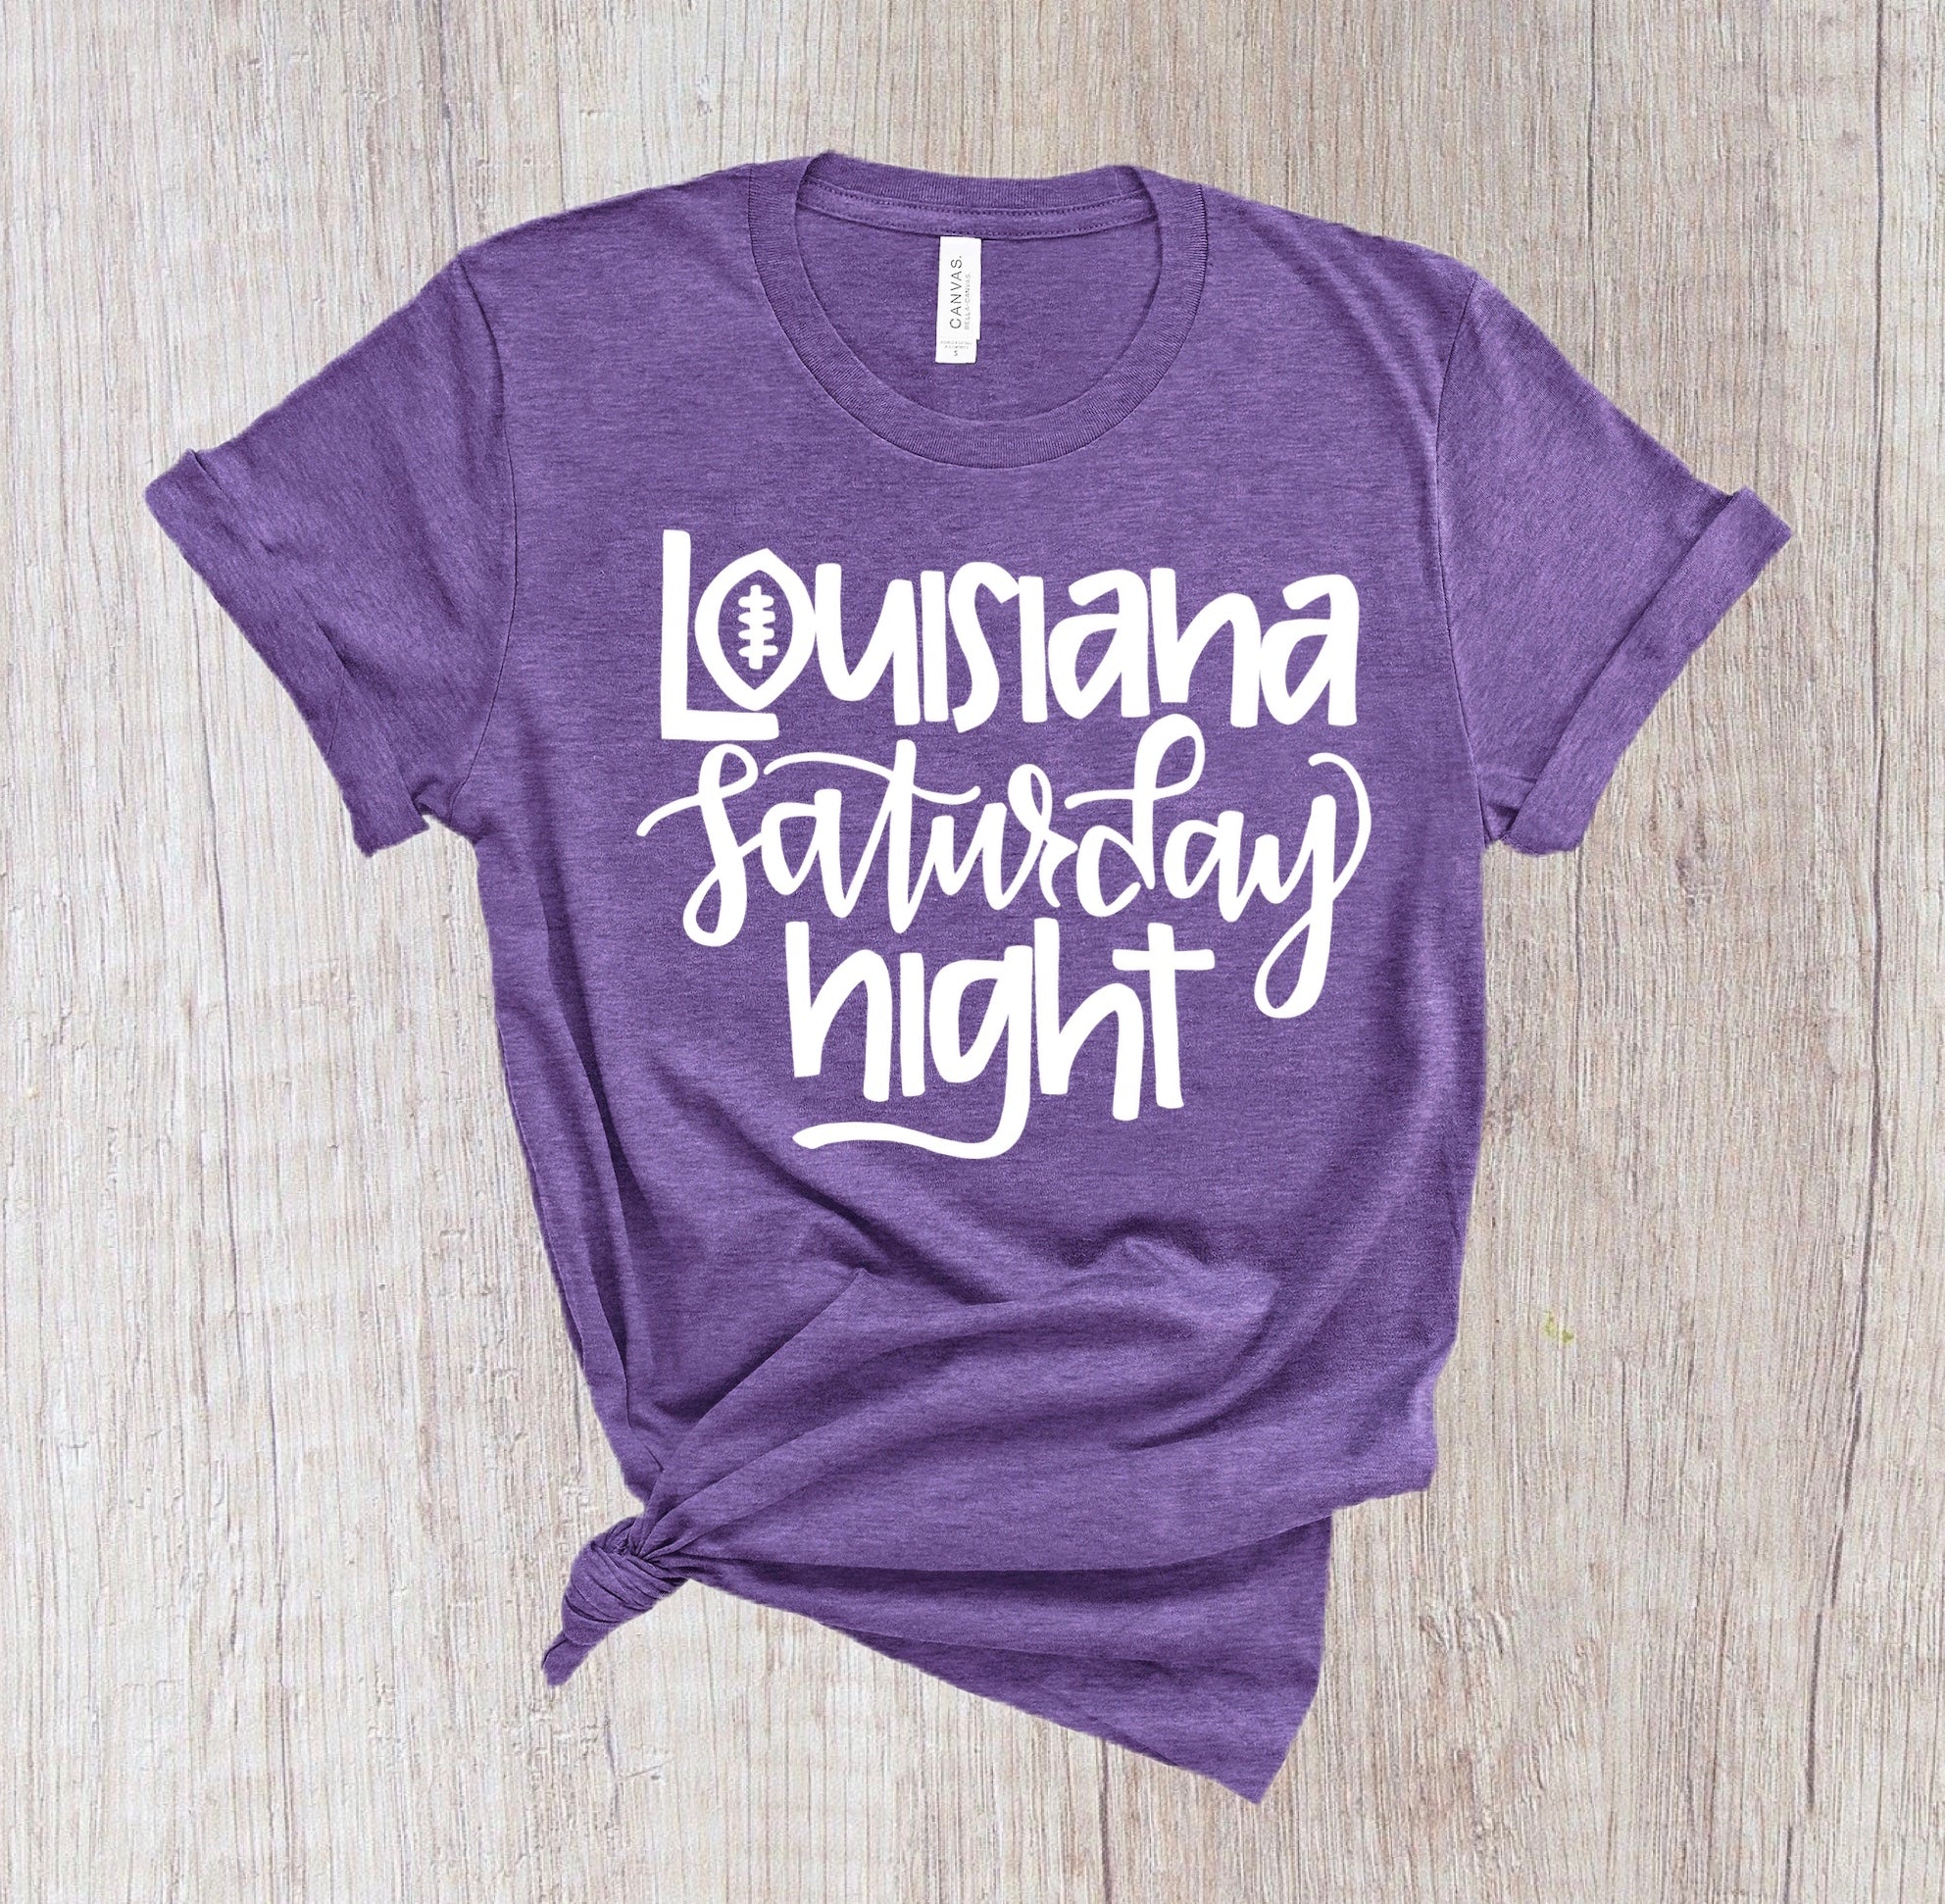 Louisiana Saturday Night Long Sleeve T-Shirt